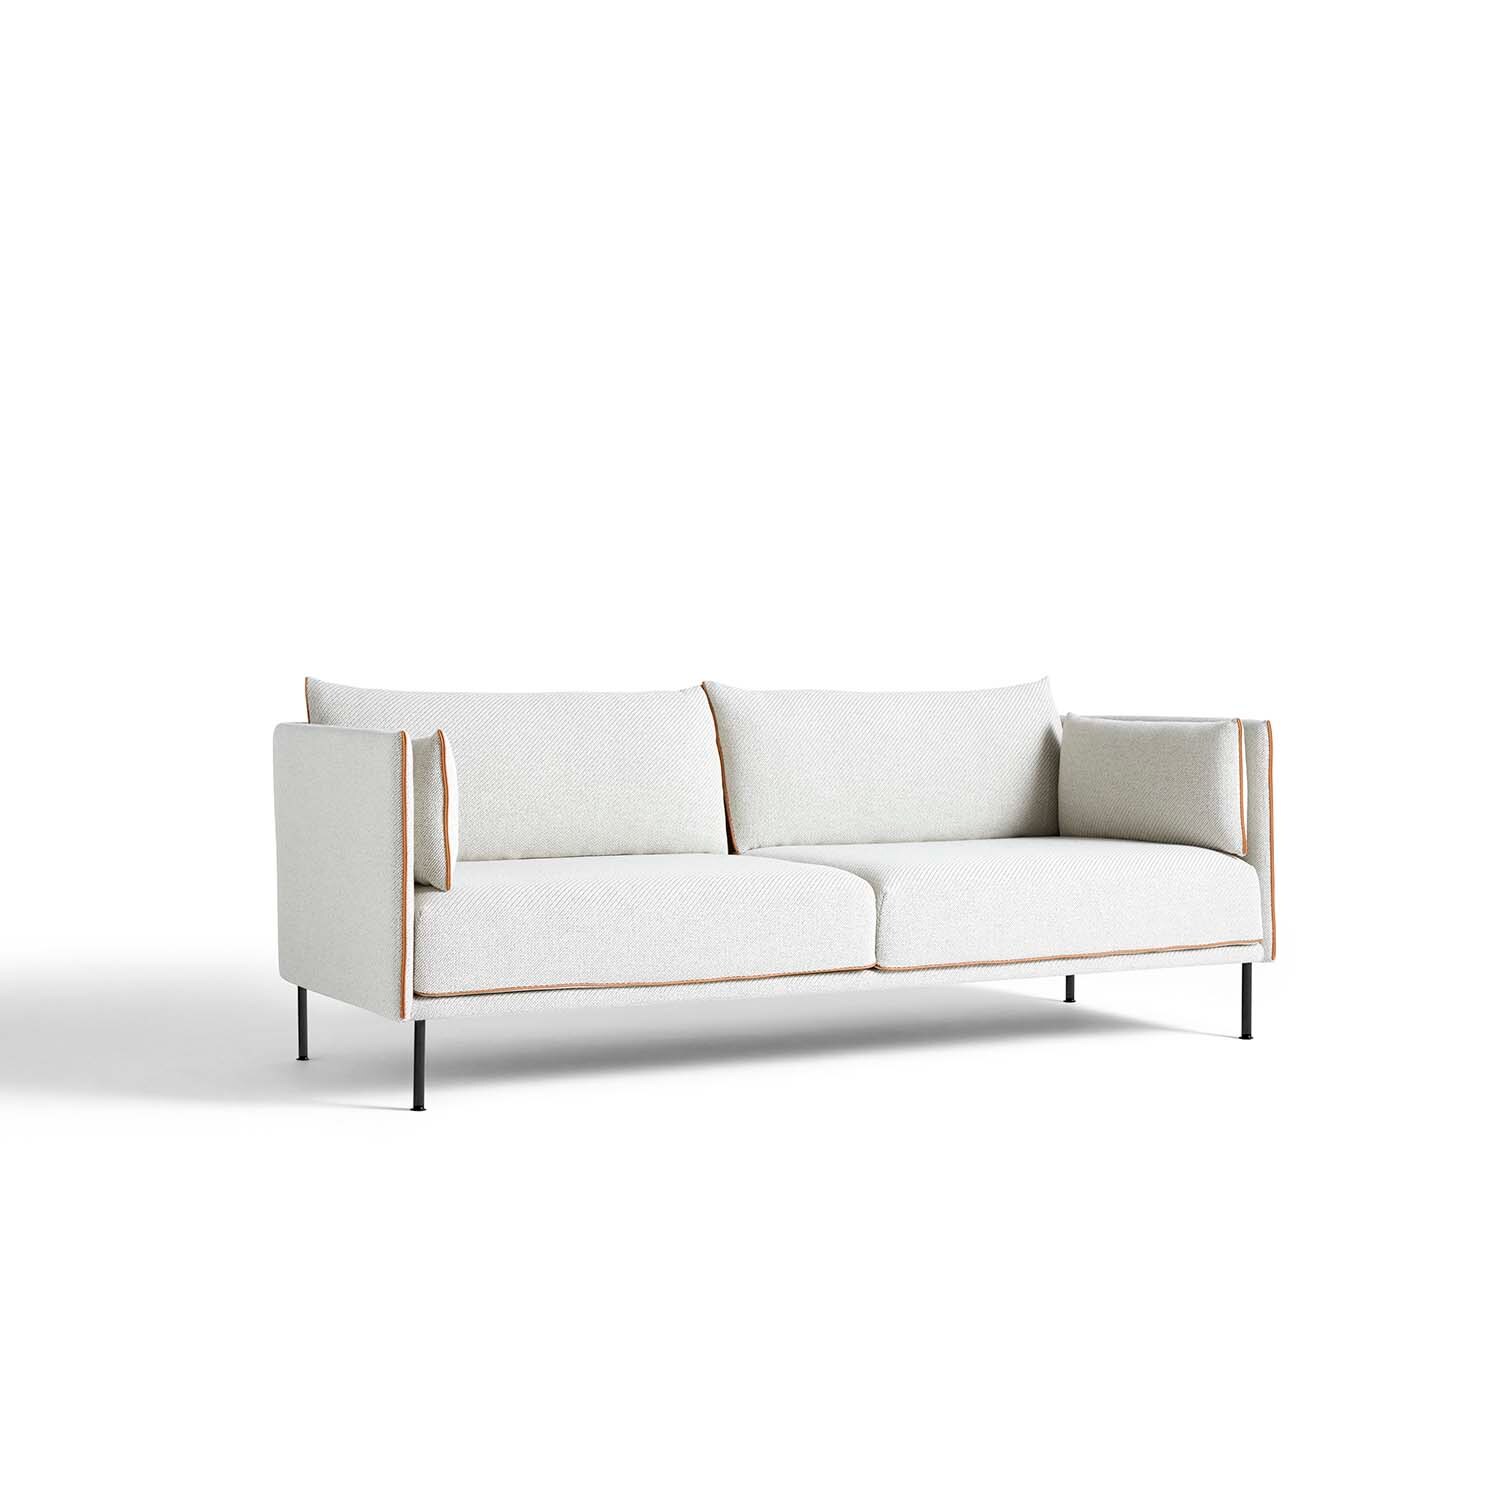 HAY Silhouette Sofa 3 Seater, Coda 100/Cognac Piping/Steel Hvit Tekstil